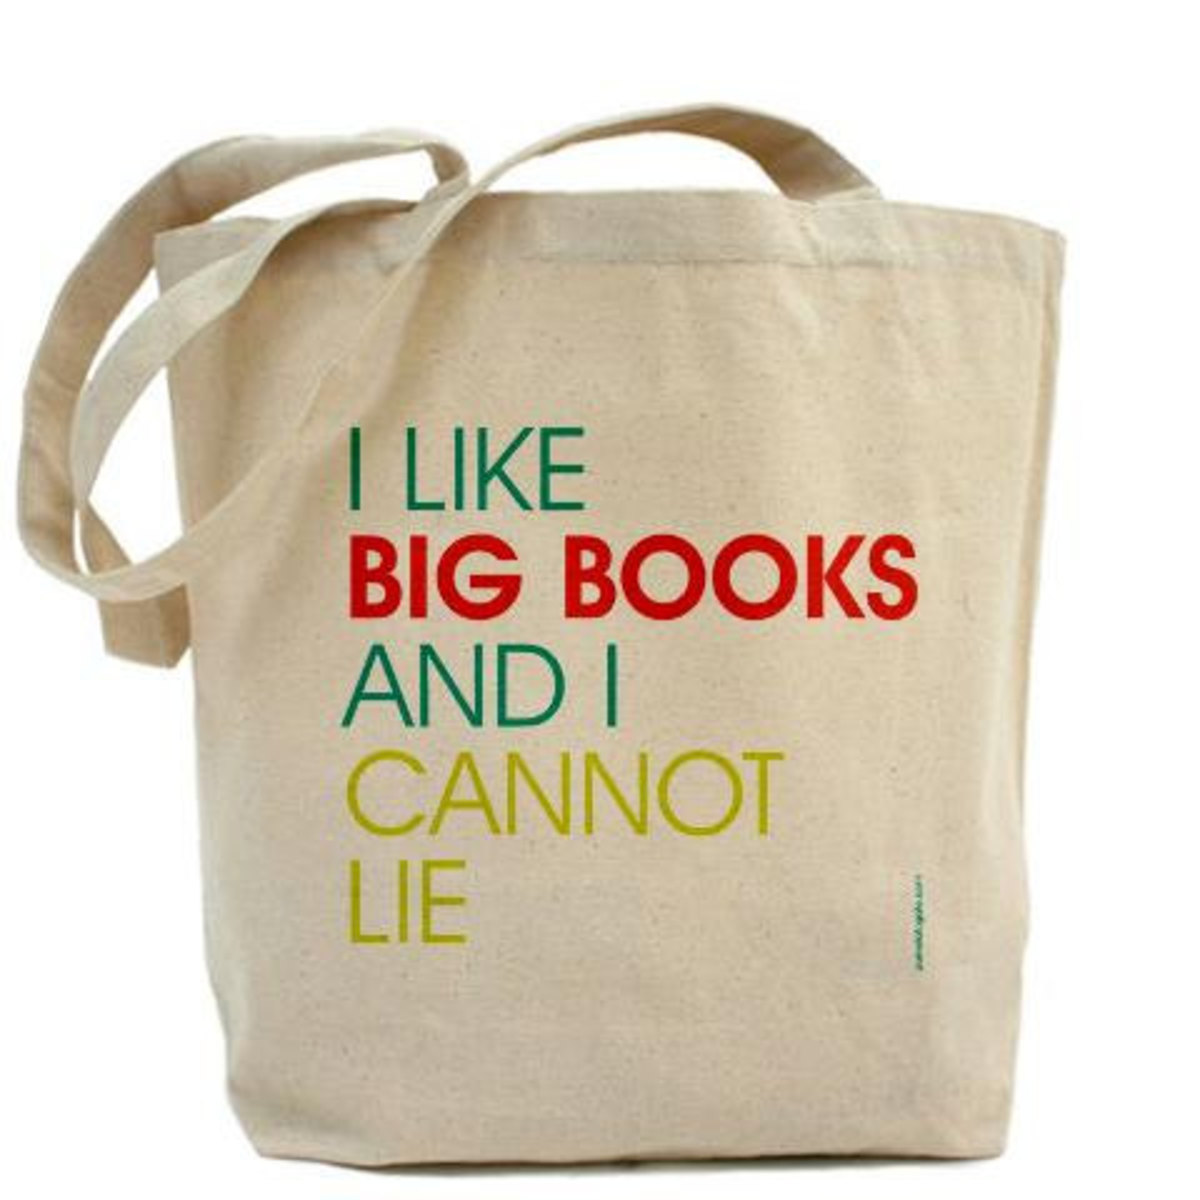 I Like Big Books and I Cannot Lie tote bag